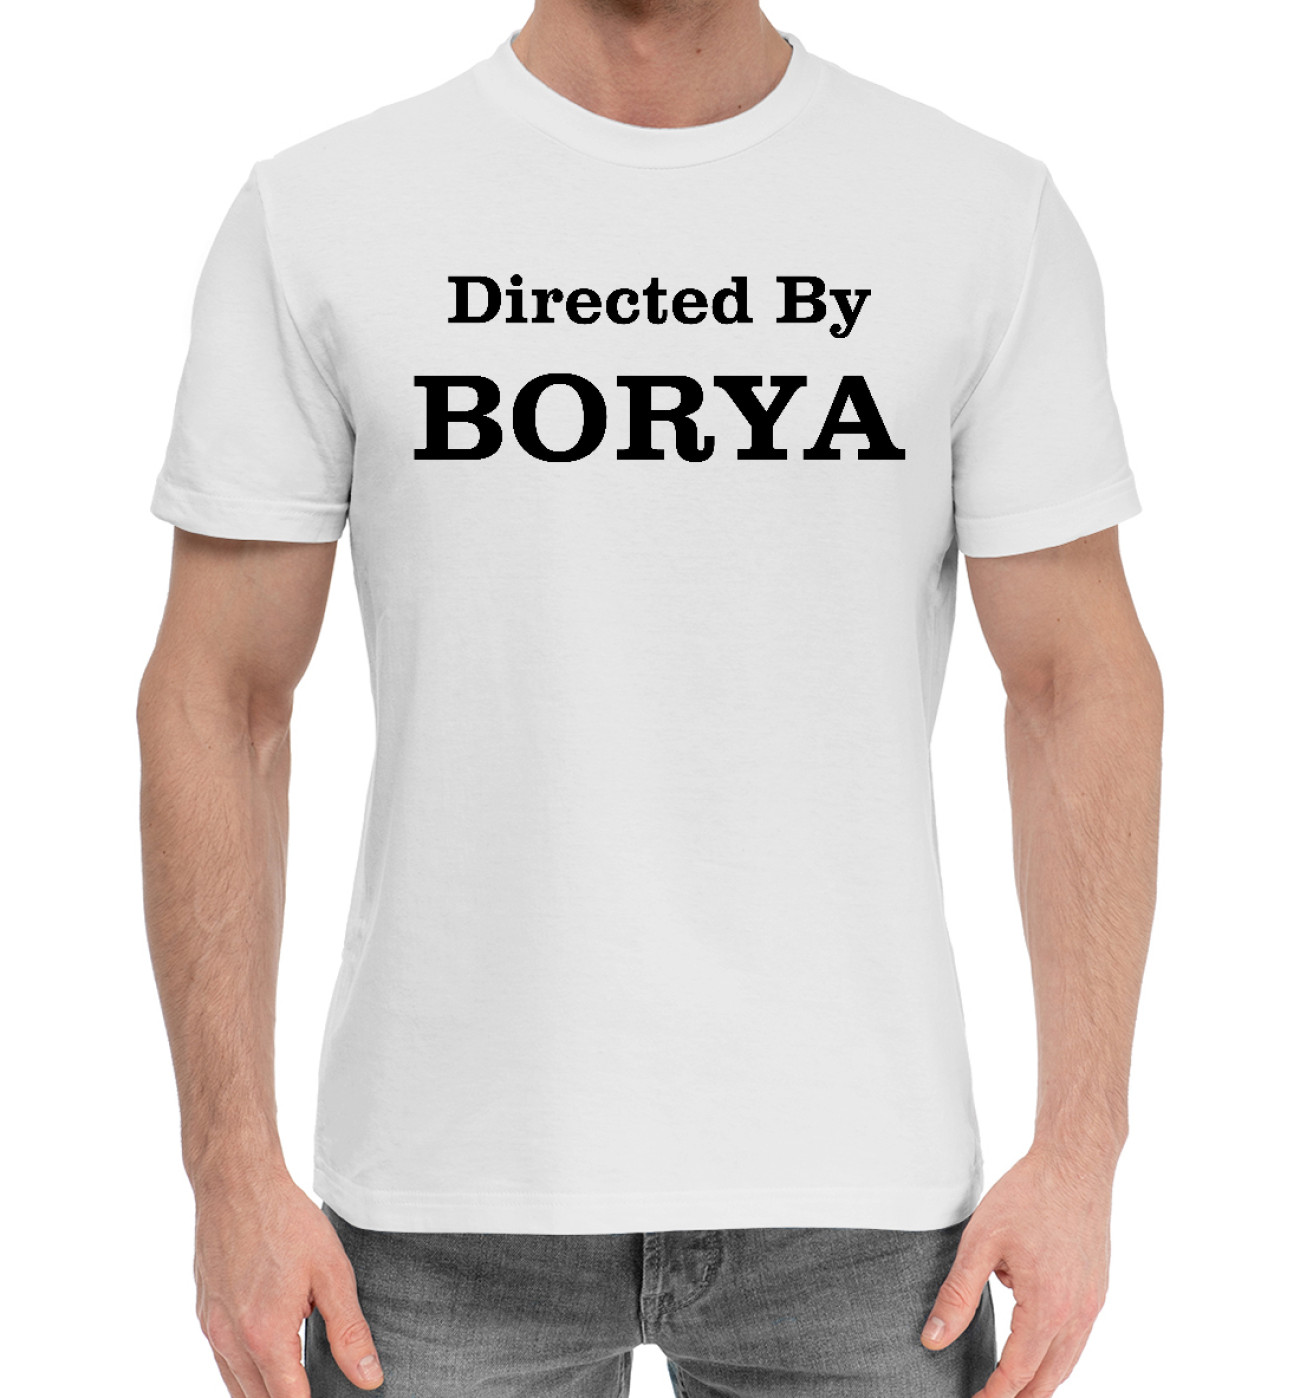 Мужская Хлопковая футболка Directed By Borya, артикул: BSI-809285-hfu-2